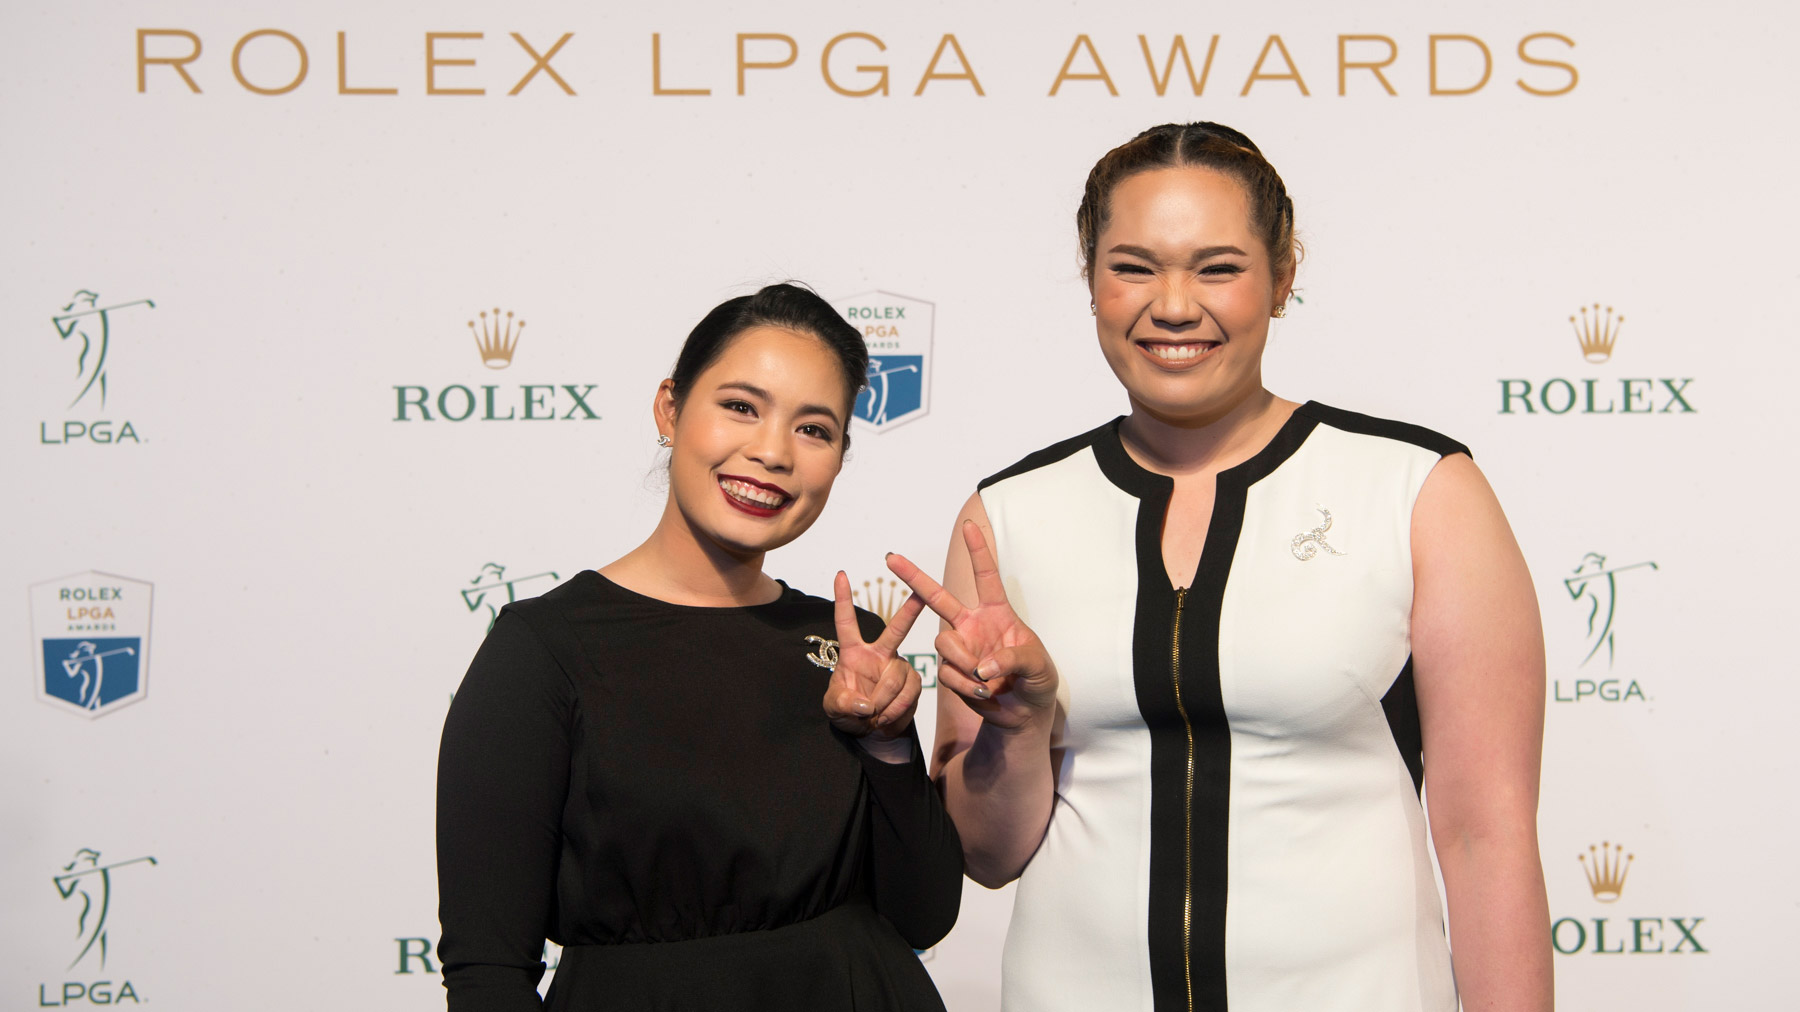 Moriya Jutanugarn (Left) and Ariya Jutanugarn on the green carpet before the 2016 Rolex LPGA Awards